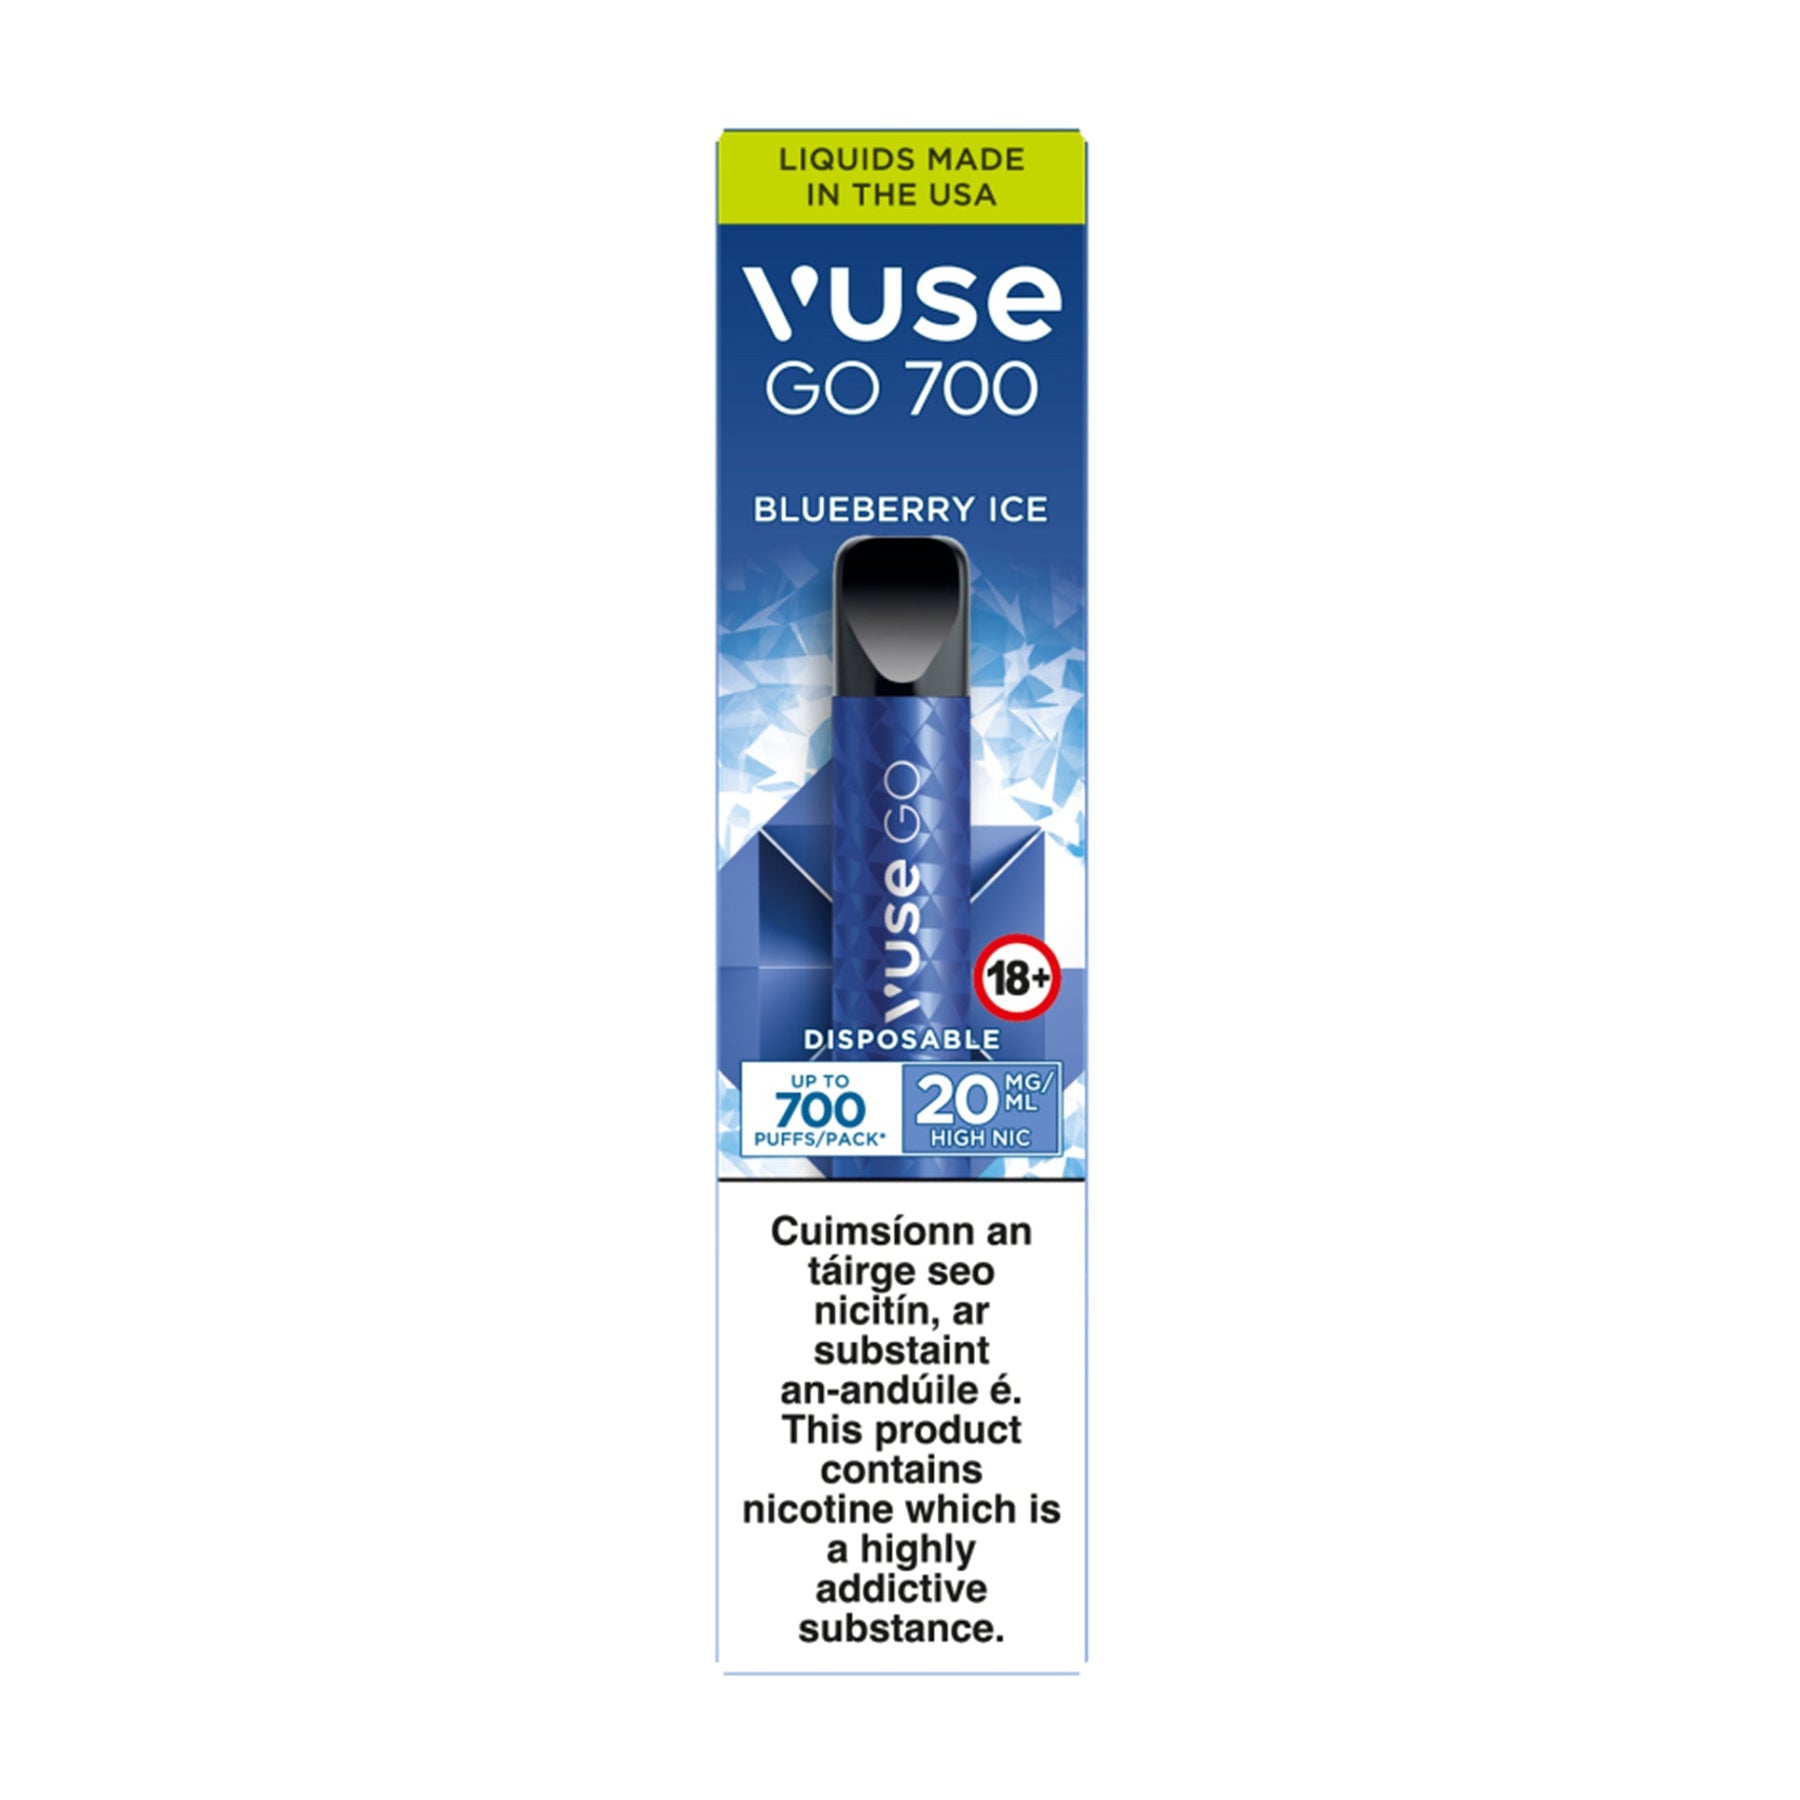 Vuse GO 700 Disposable Vape